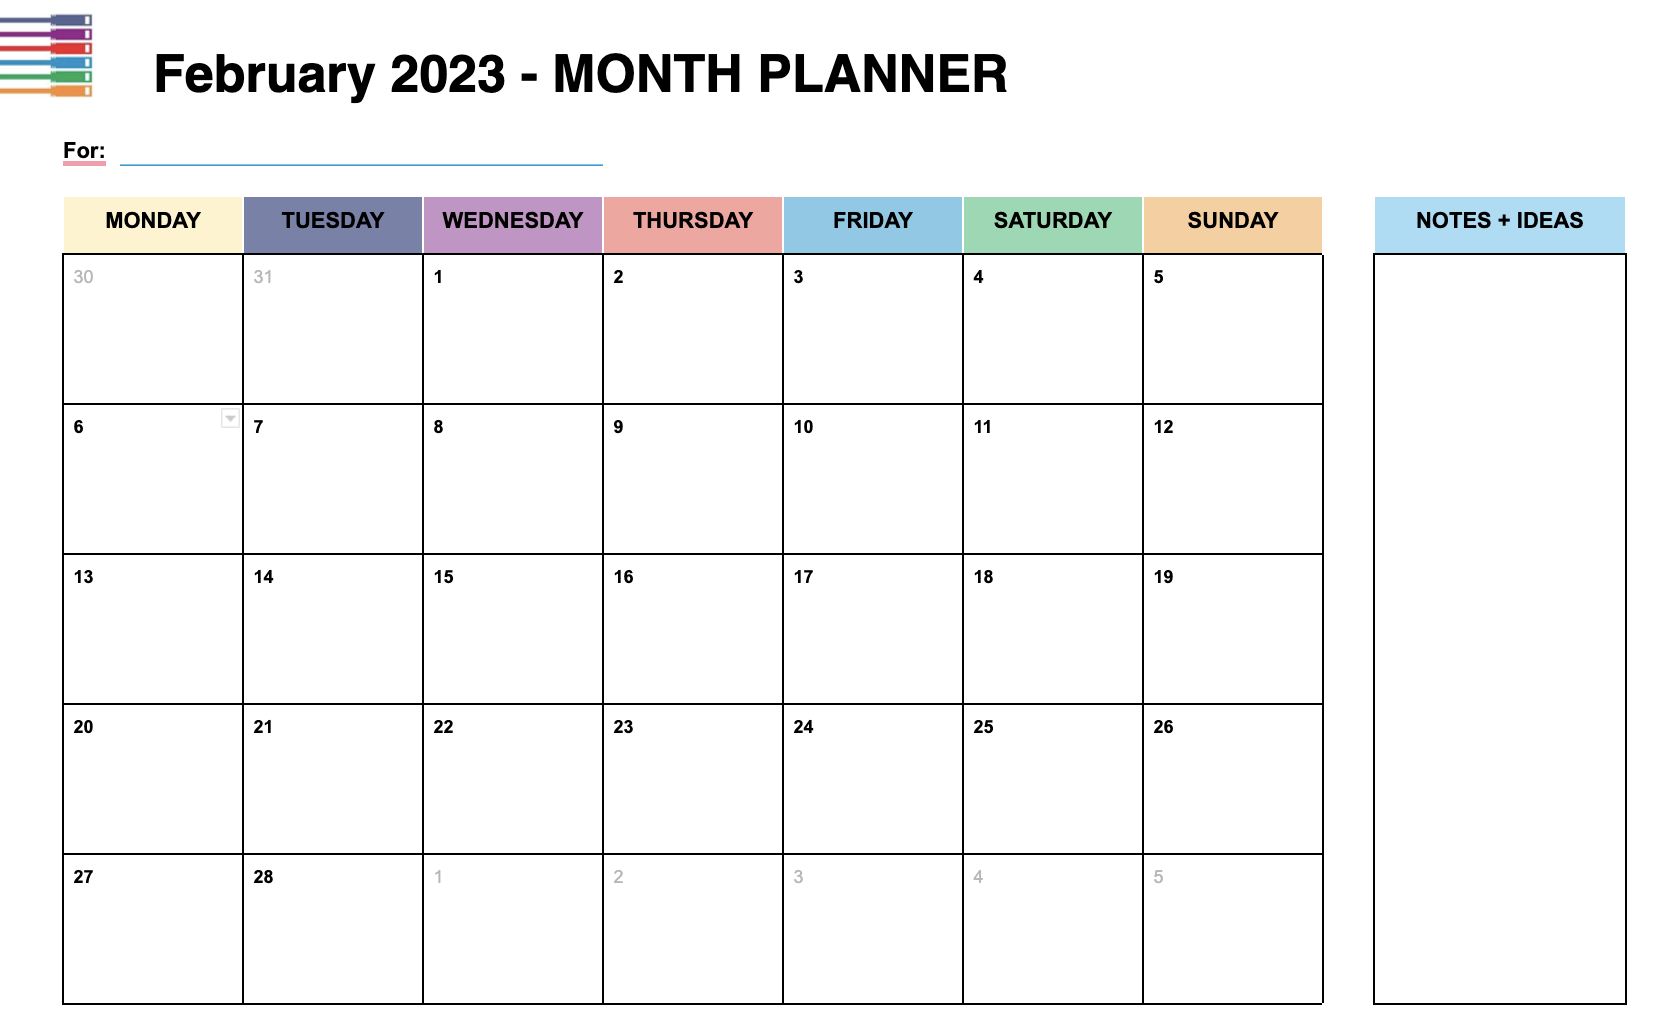 Feb 2023 Planner